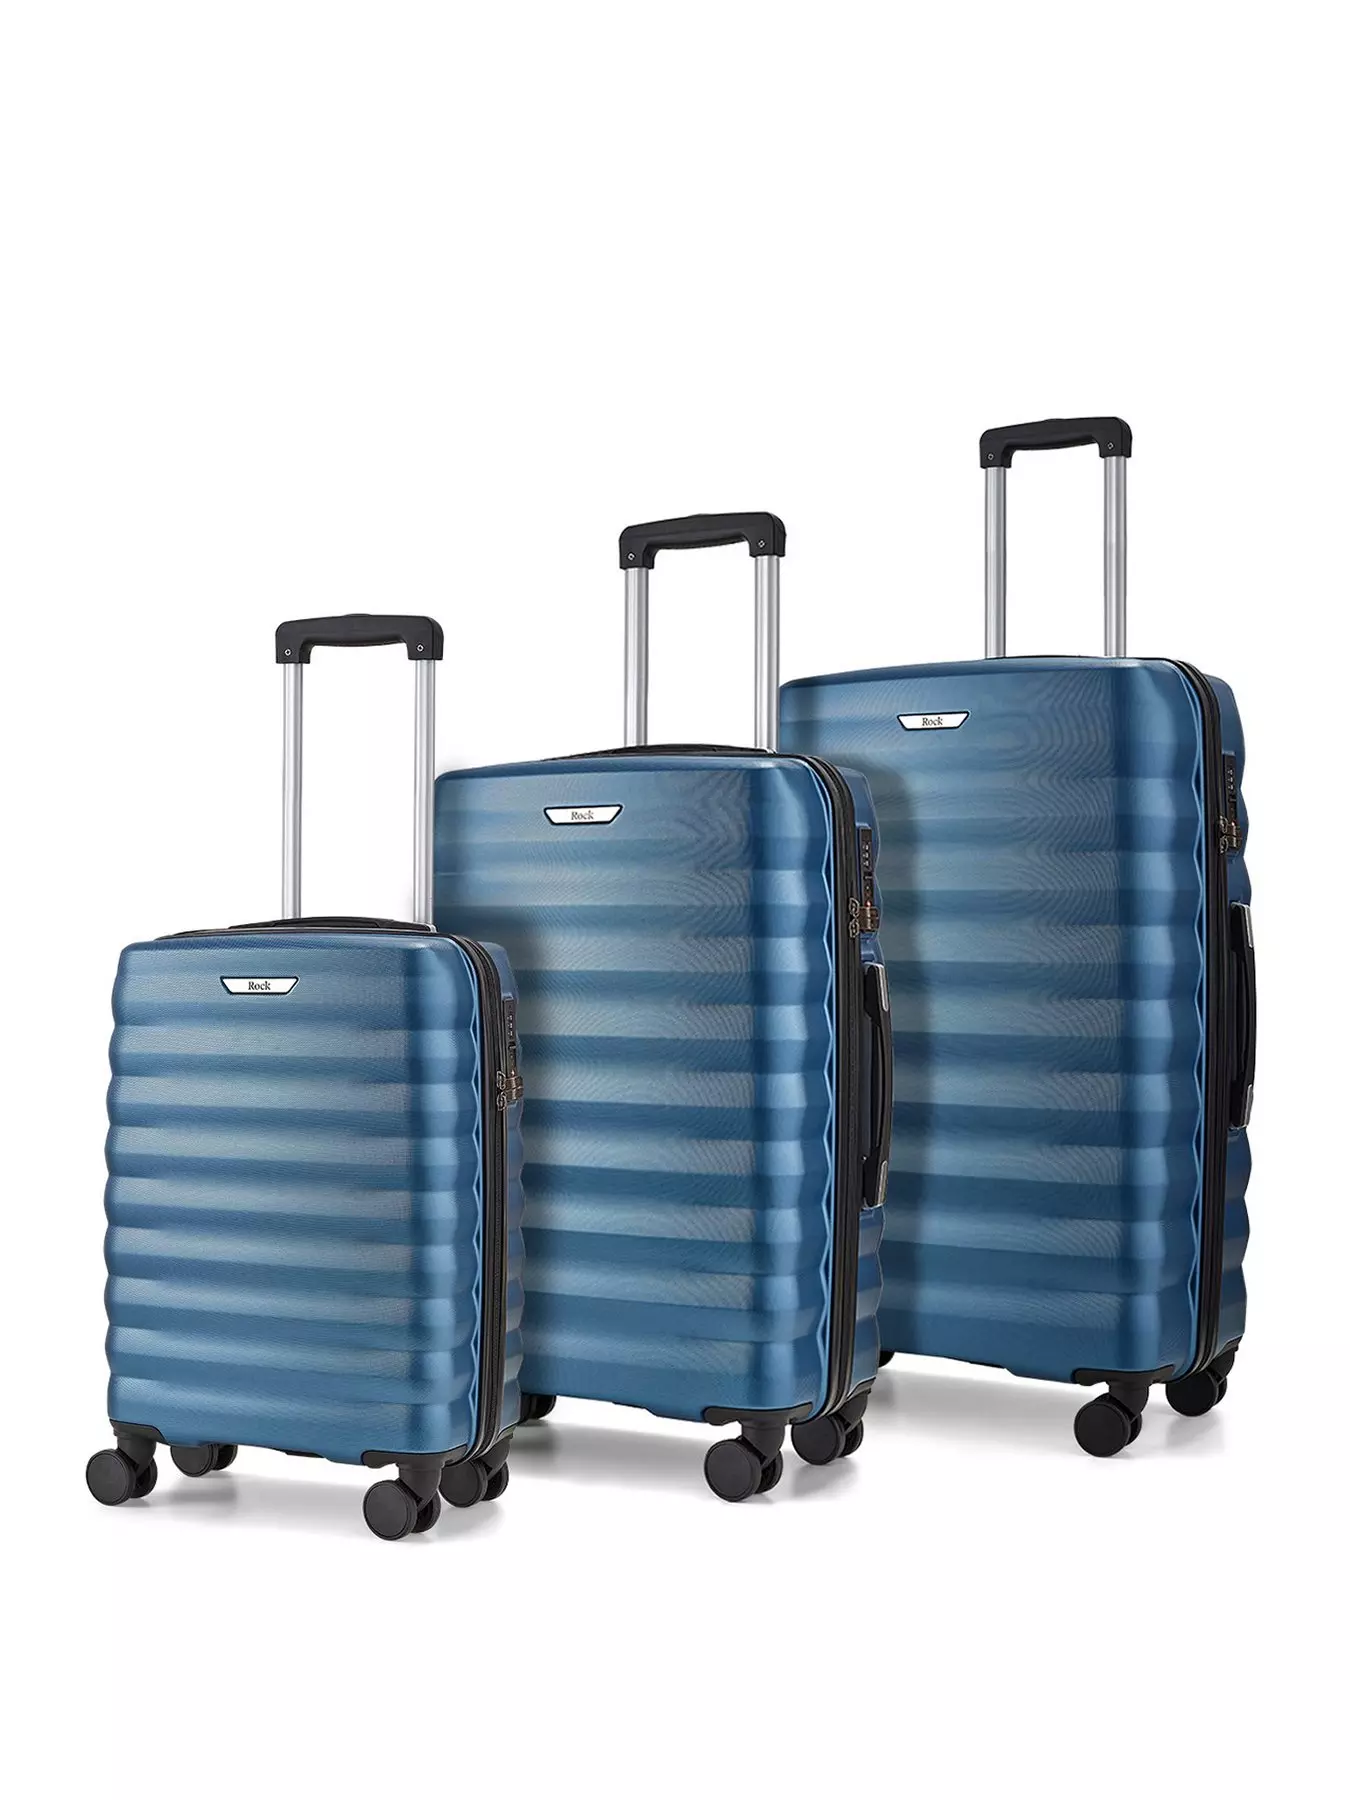 https://media.very.co.uk/i/very/VXP4X_SQ1_0000000020_BLUE_SLf/rock-luggage-berlin-8-wheel-hardshell-3pc-suitcase-set-blue.jpg?$180x240_retinamobilex2$&fmt=webp